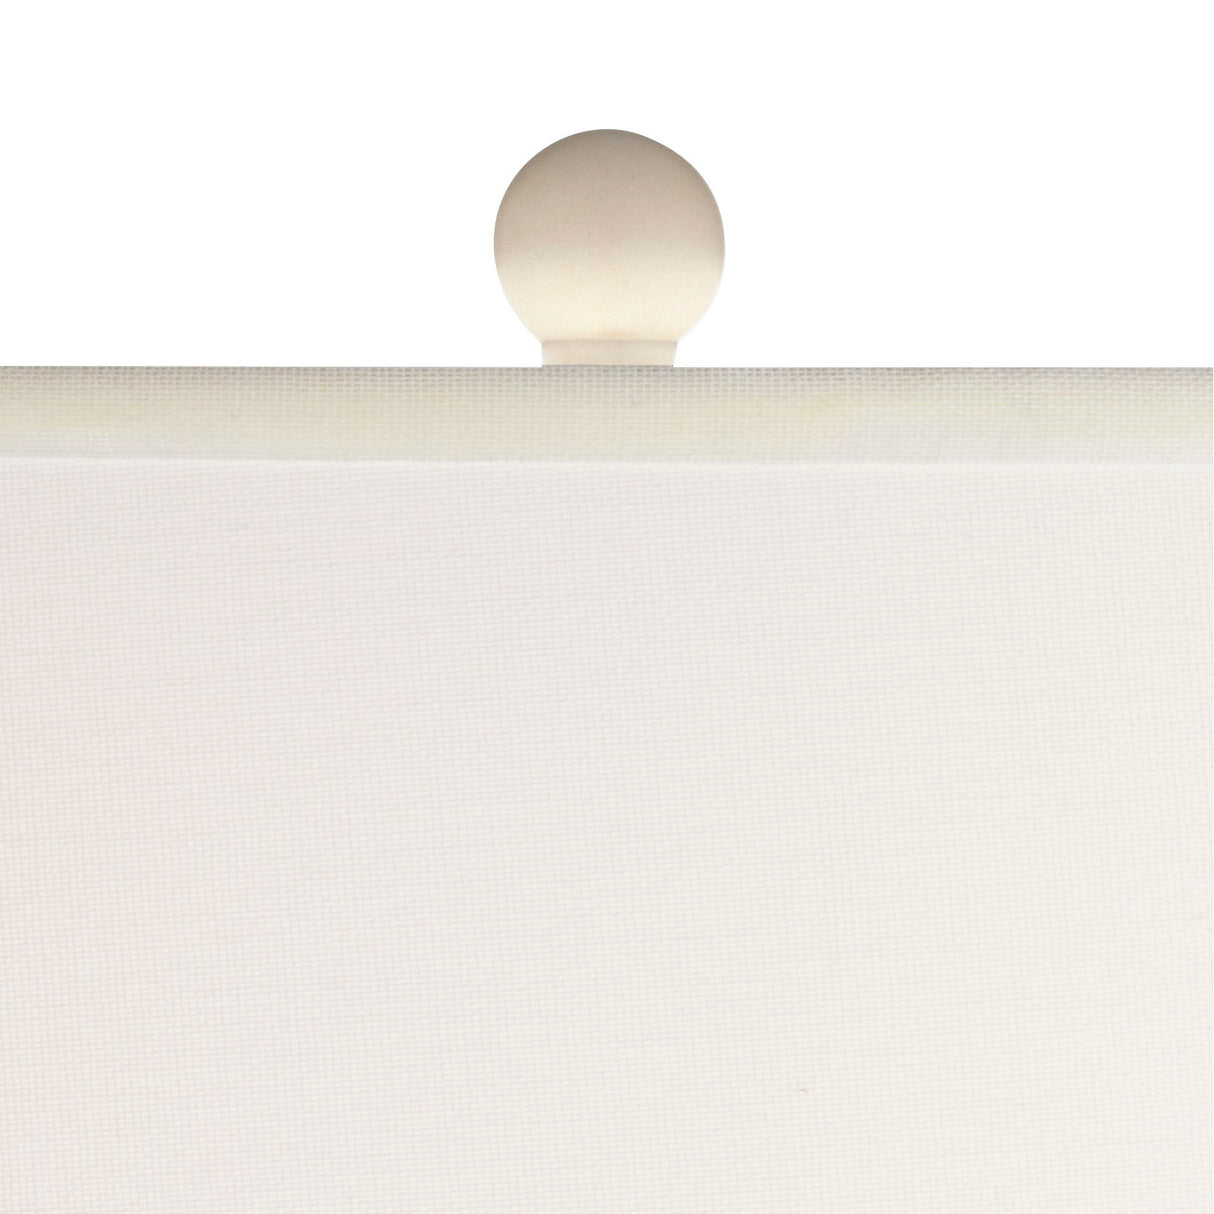 Atlas - Table Lamps - White